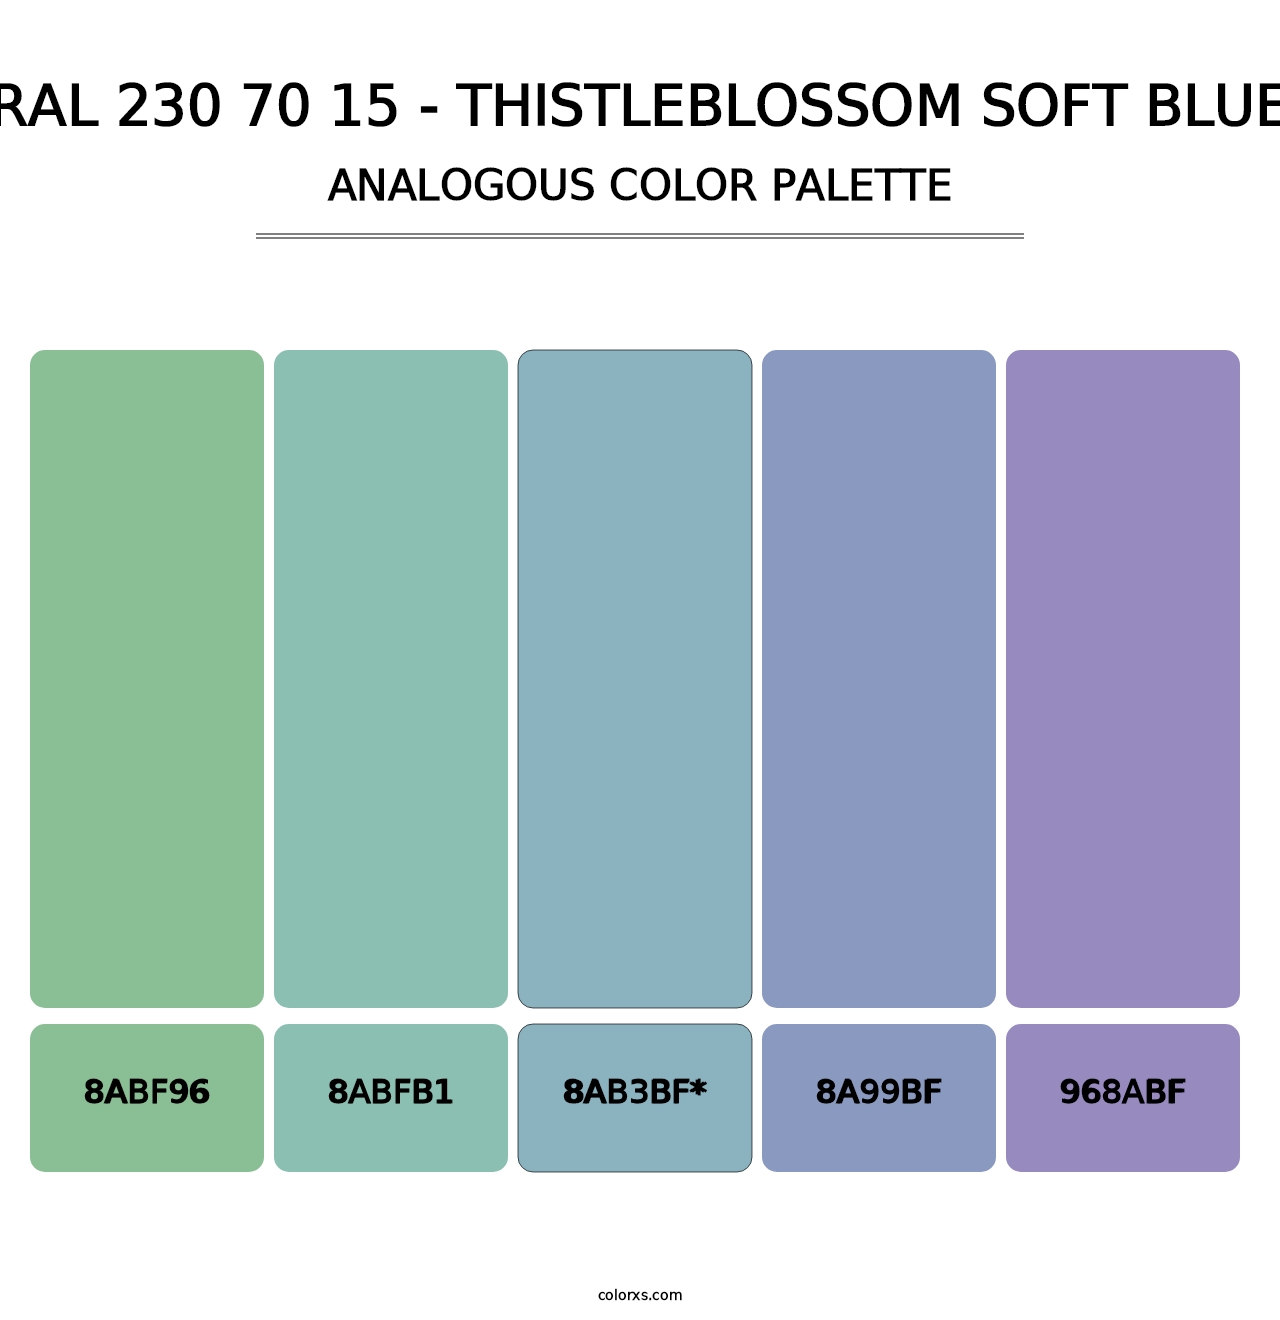 RAL 230 70 15 - Thistleblossom Soft Blue - Analogous Color Palette